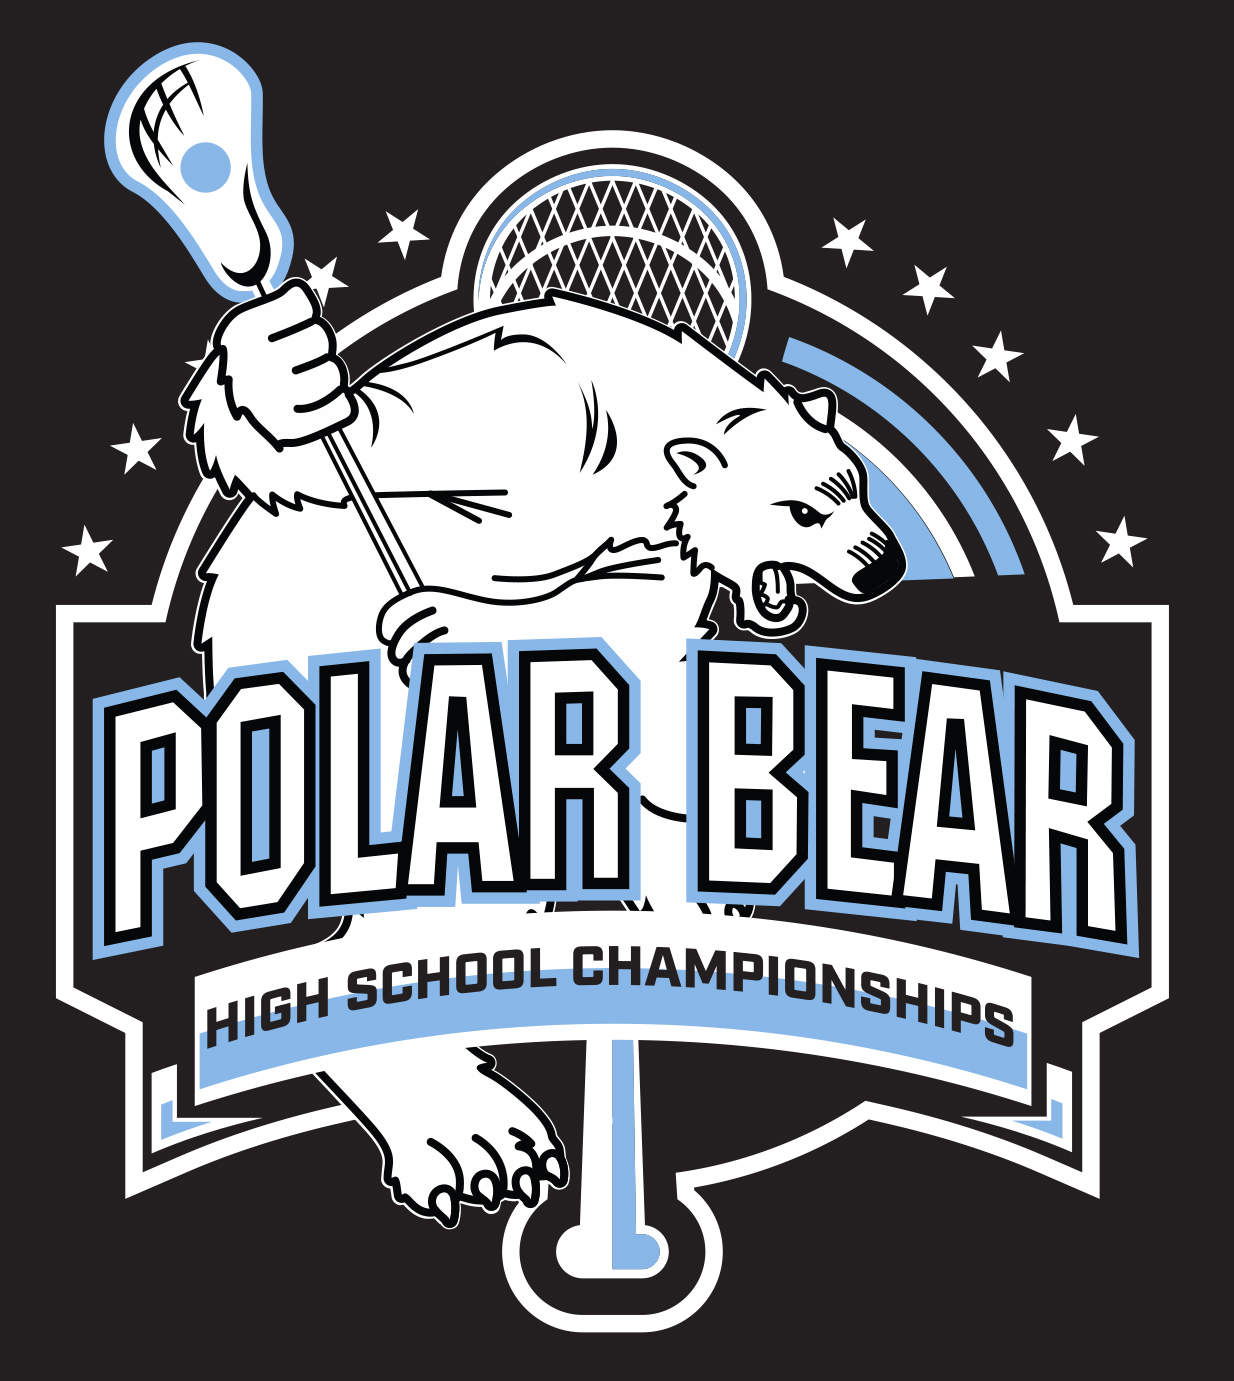 Polar Bear HS Championships